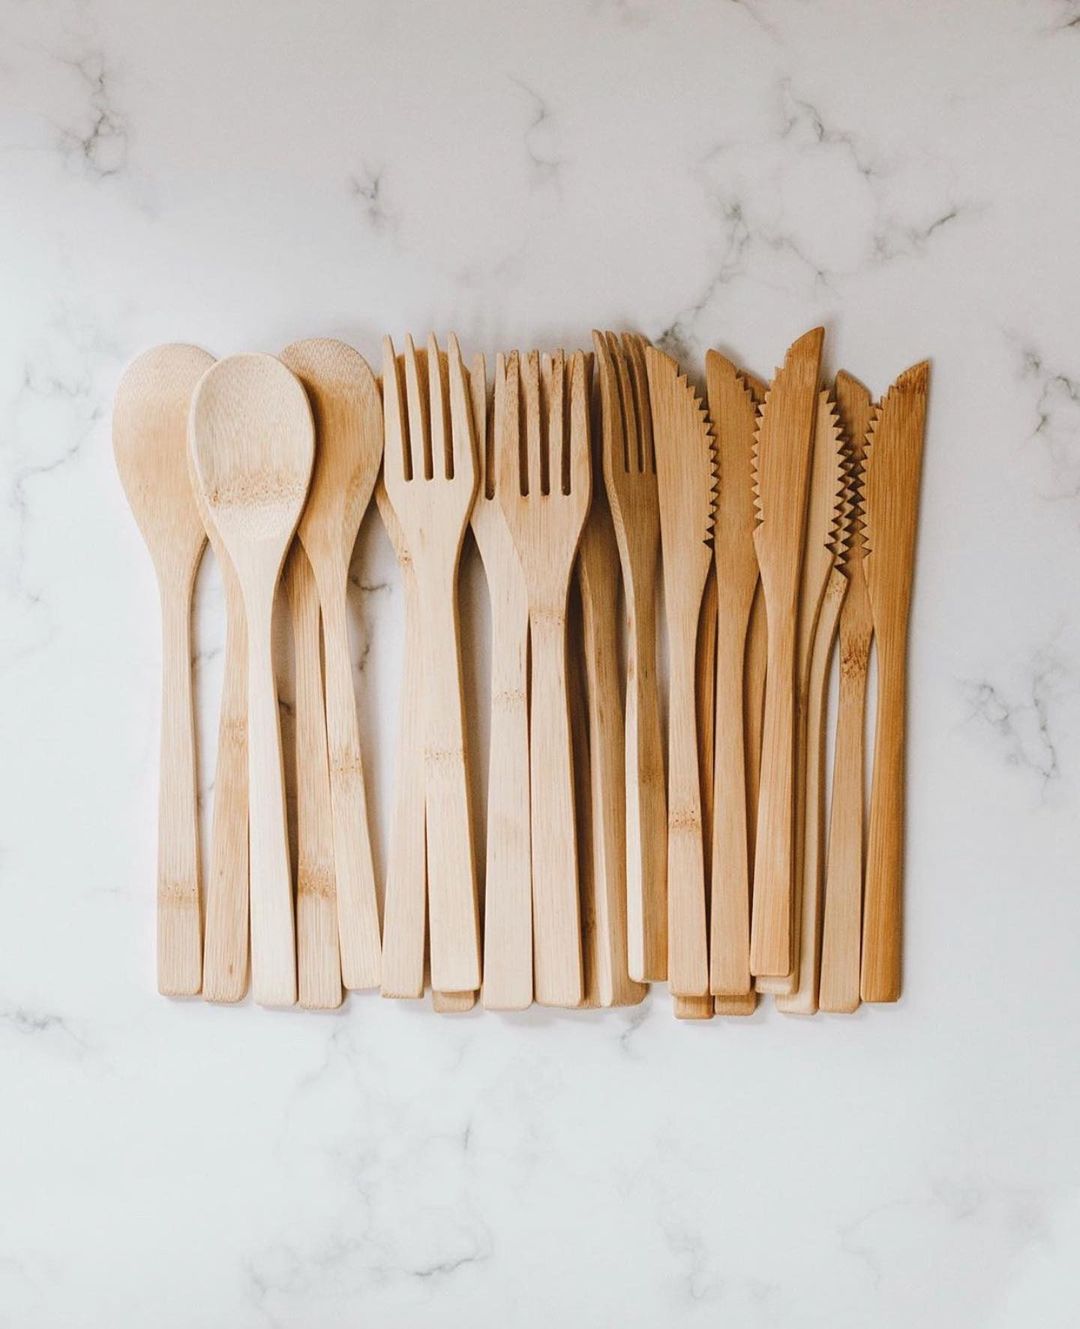 Wooden Cutlery for your Kitchen. Photo by Instagram user @dr.rachelwetzel